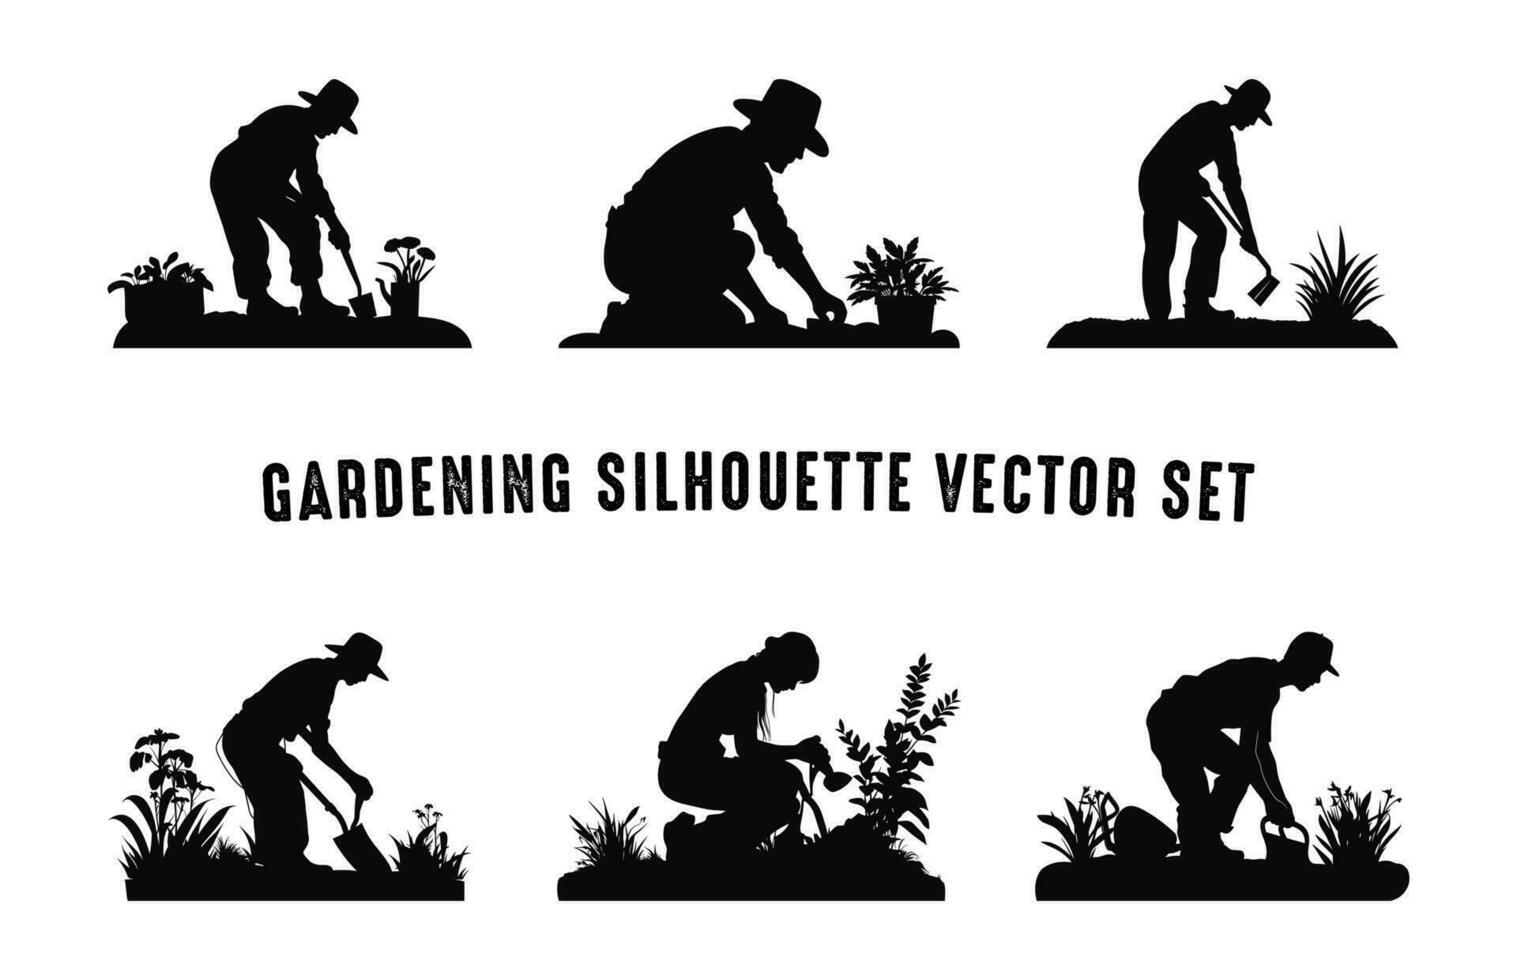 Gardener Silhouette clipart Bundle, Gardening people silhouettes Vector Set